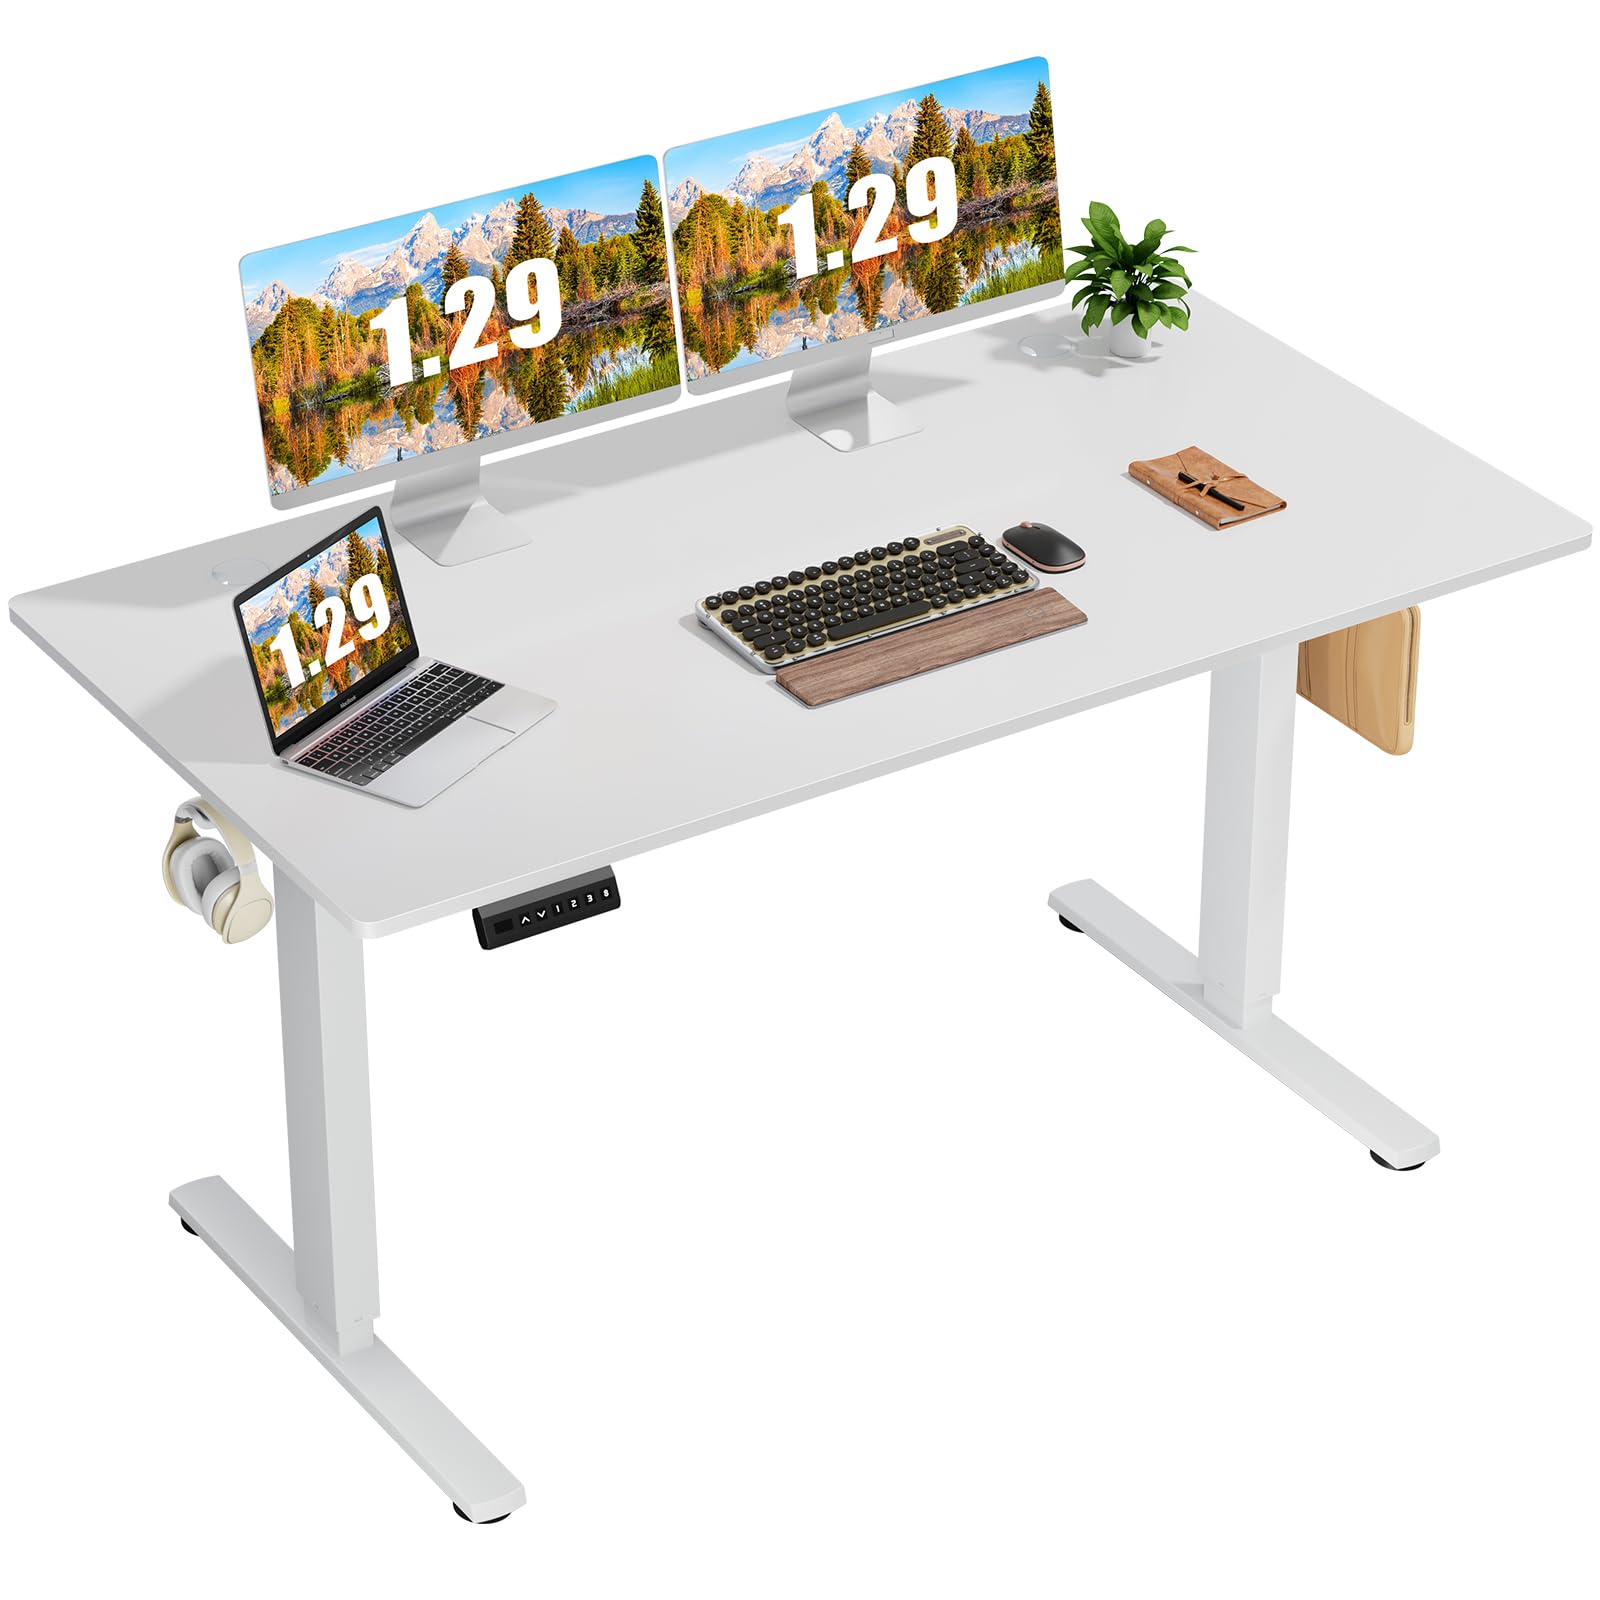 55" x 24" Sweetcrispy Motorized Adjustable Standing Split Top Desk (White) $110 + Free Shipping